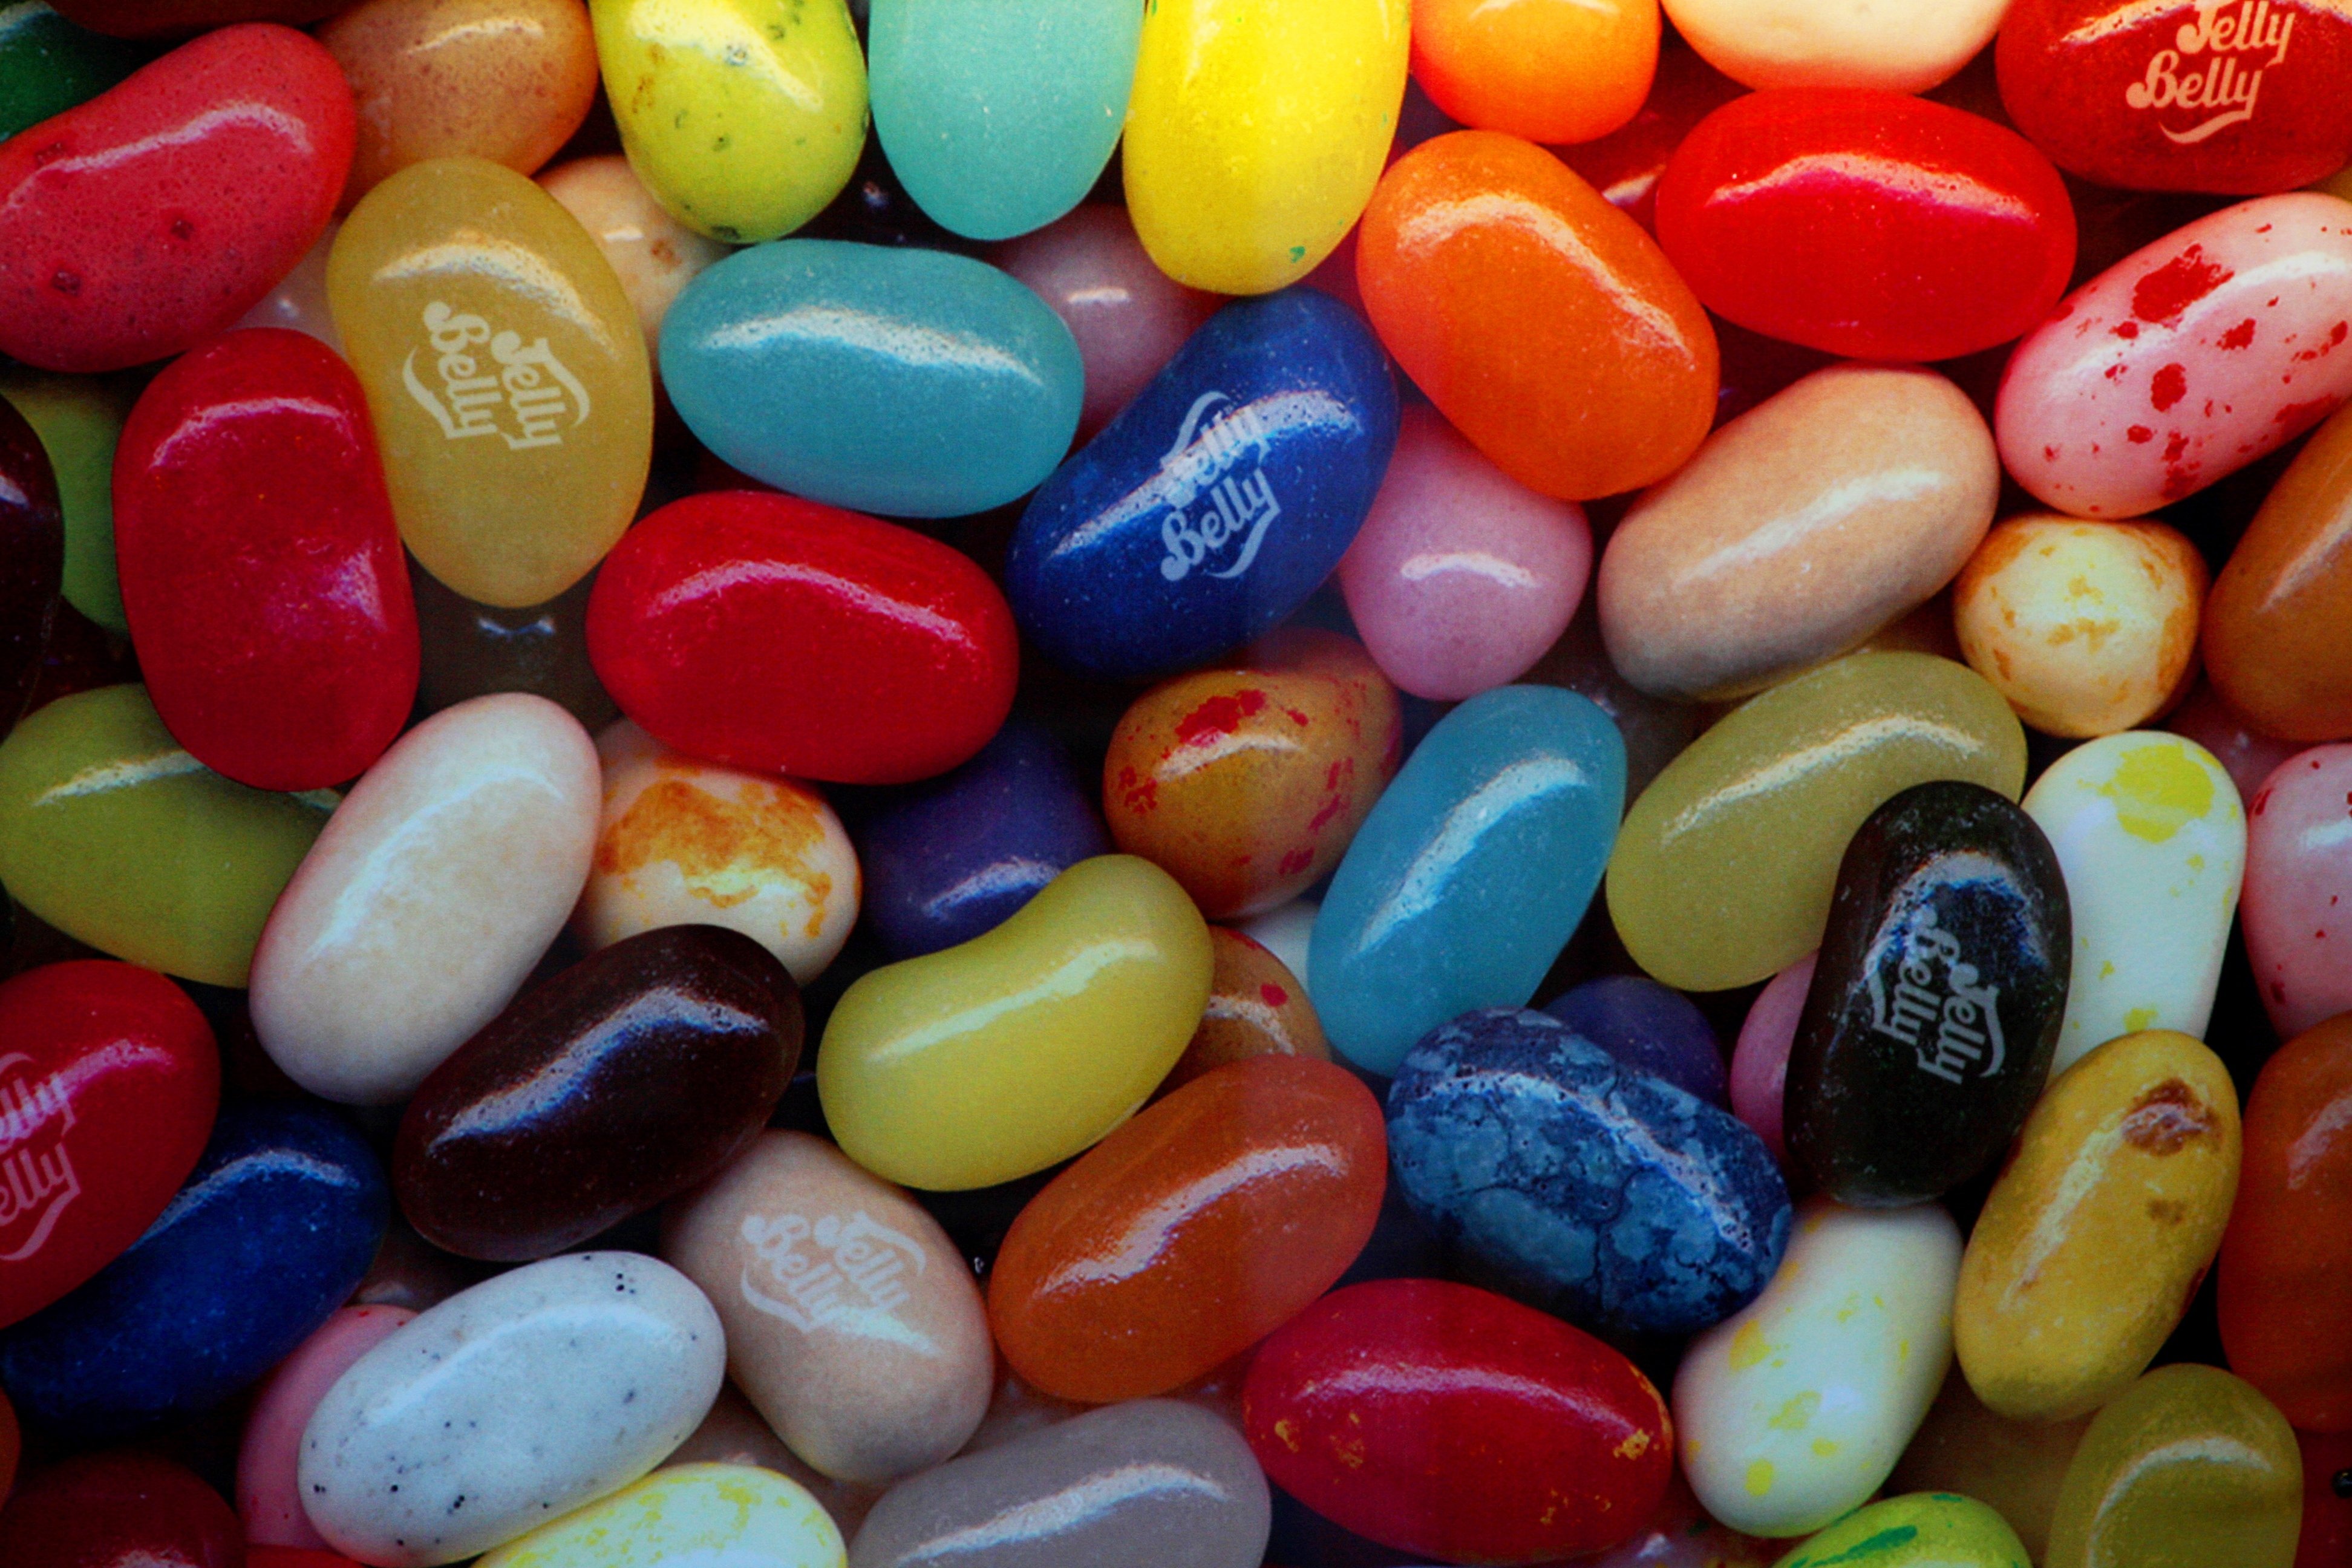 Jelly beanbrainss. Мармелад Джелли Бин. Джелли Бин жевательный мармелад. Джелли Белли разноцветная конфета. Конфеты разноцветные.